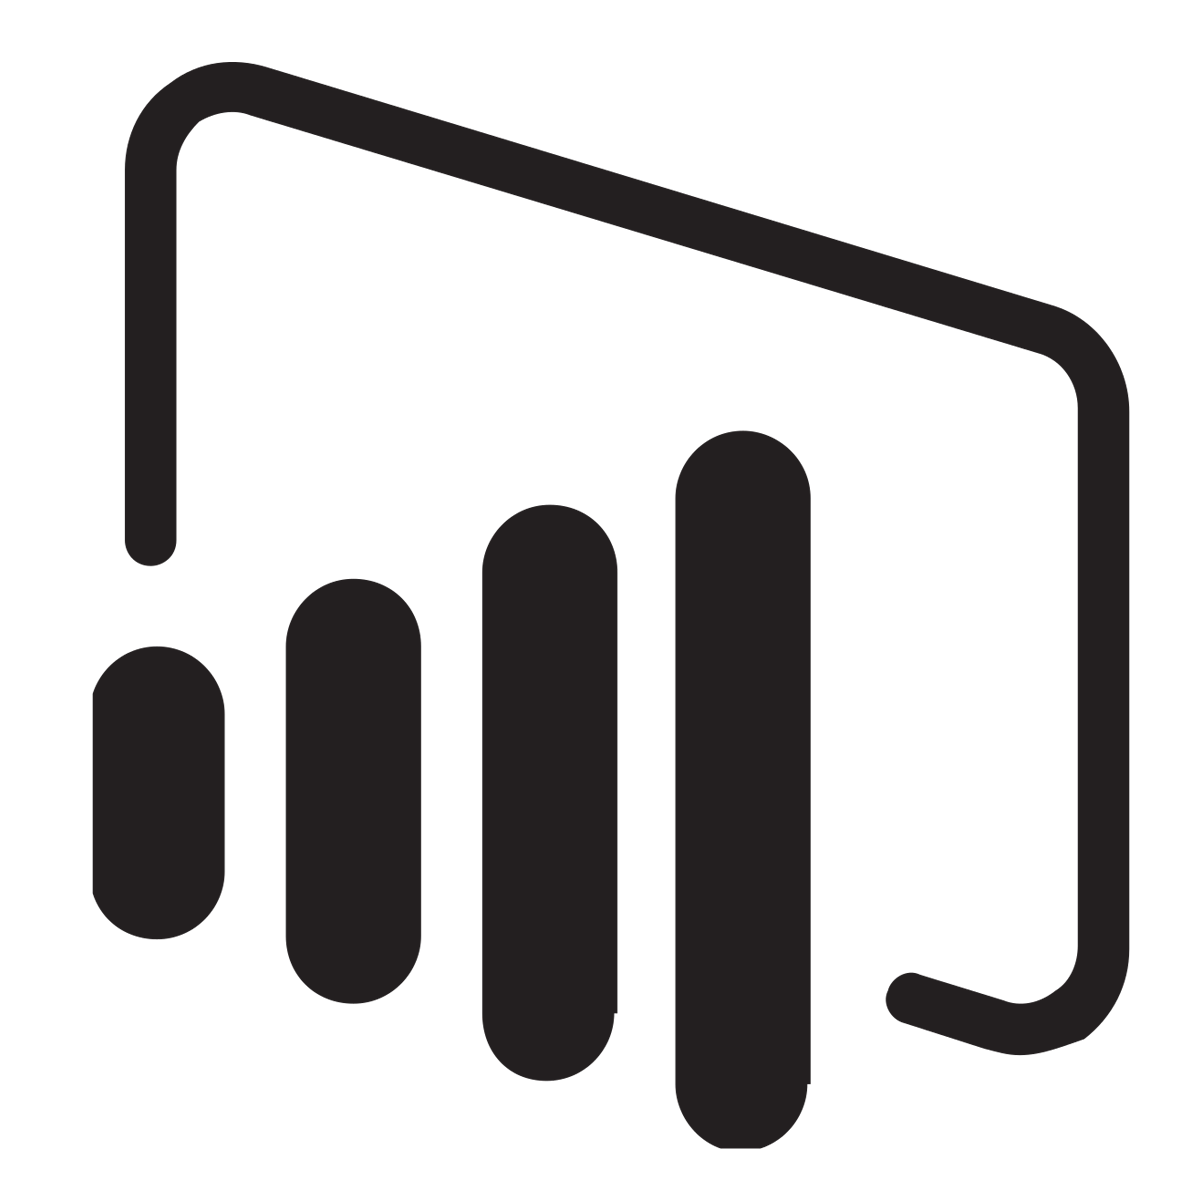 Power BI Logo - Microsoft Power BI: Honest Reviews, Comparisons, and Pricing